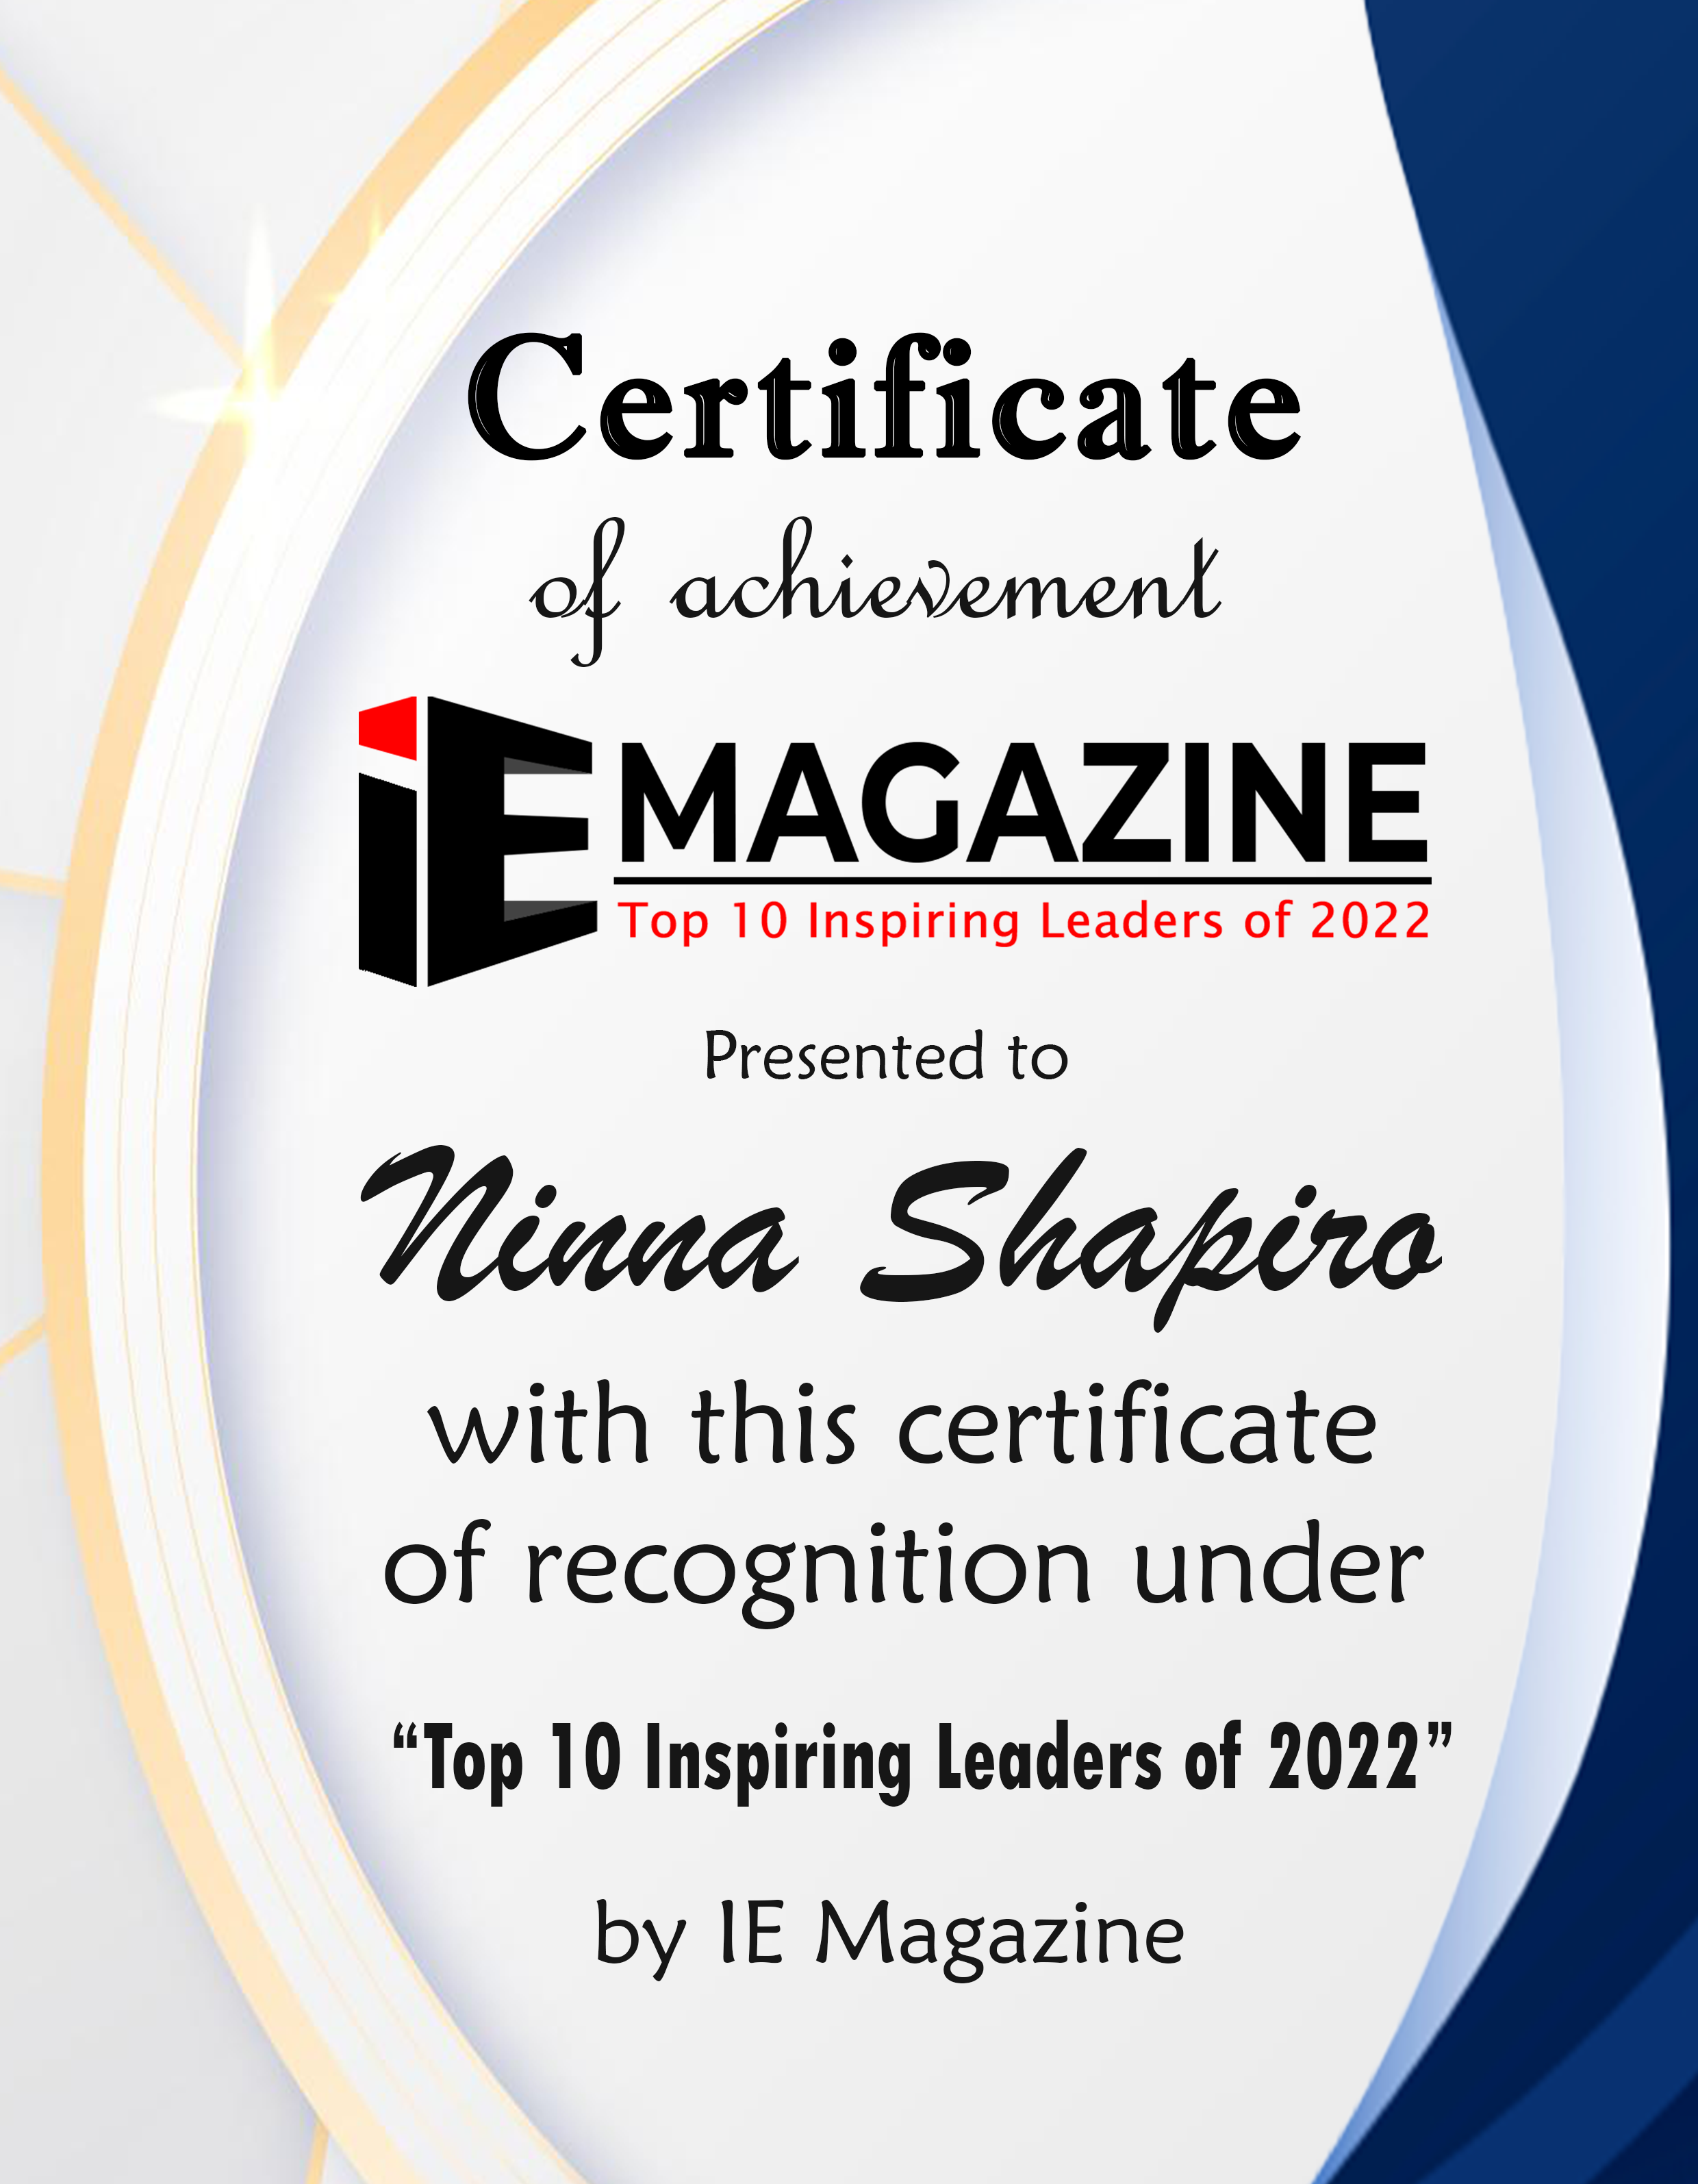 Ninna Shapiro, CEO of Dot Com Media Certificate